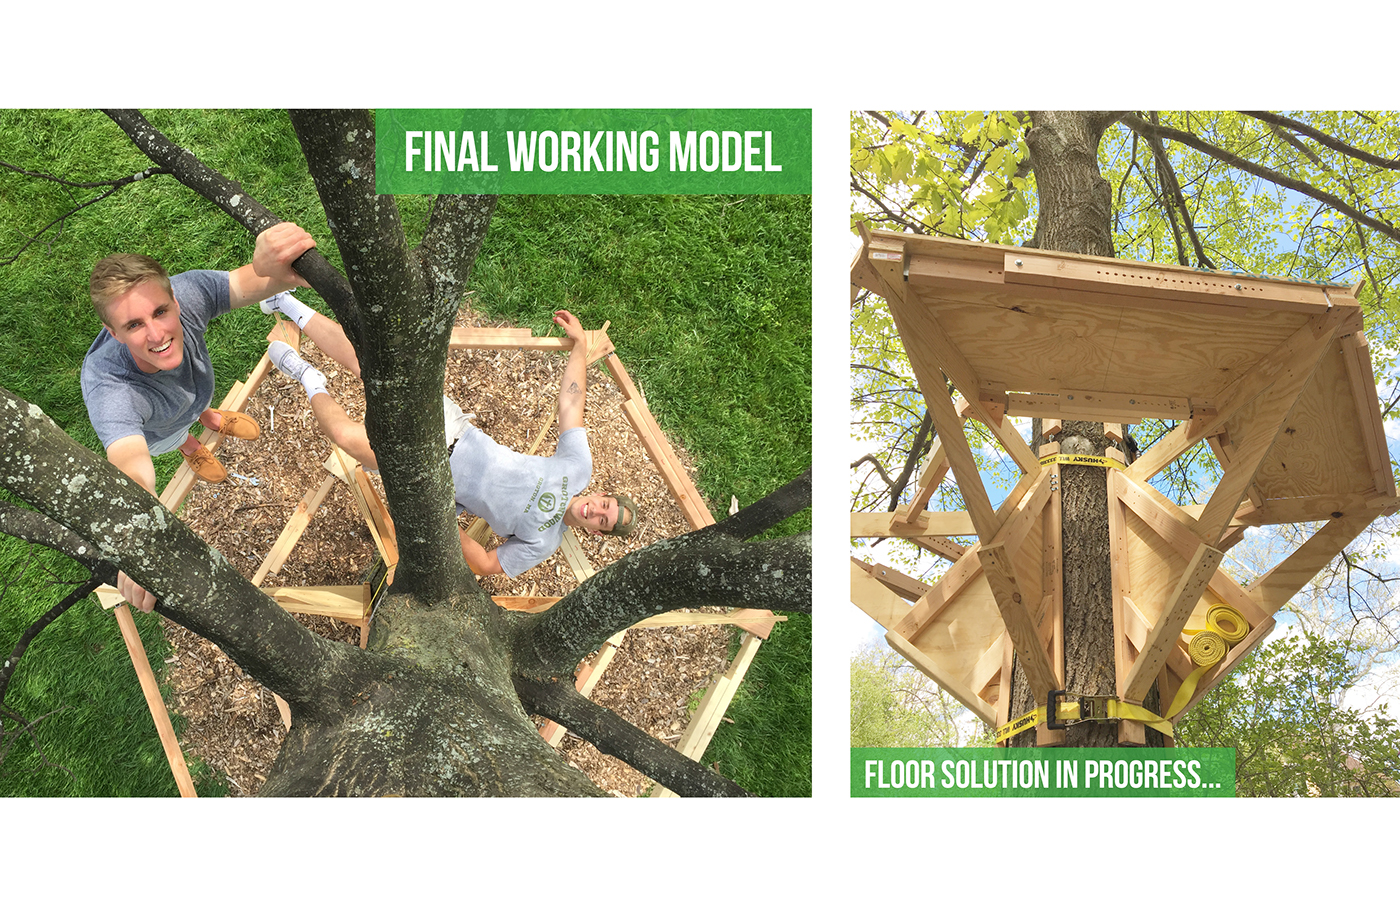 Tree Fort trees modular industrial design  kids children ikea outdoors play Playground